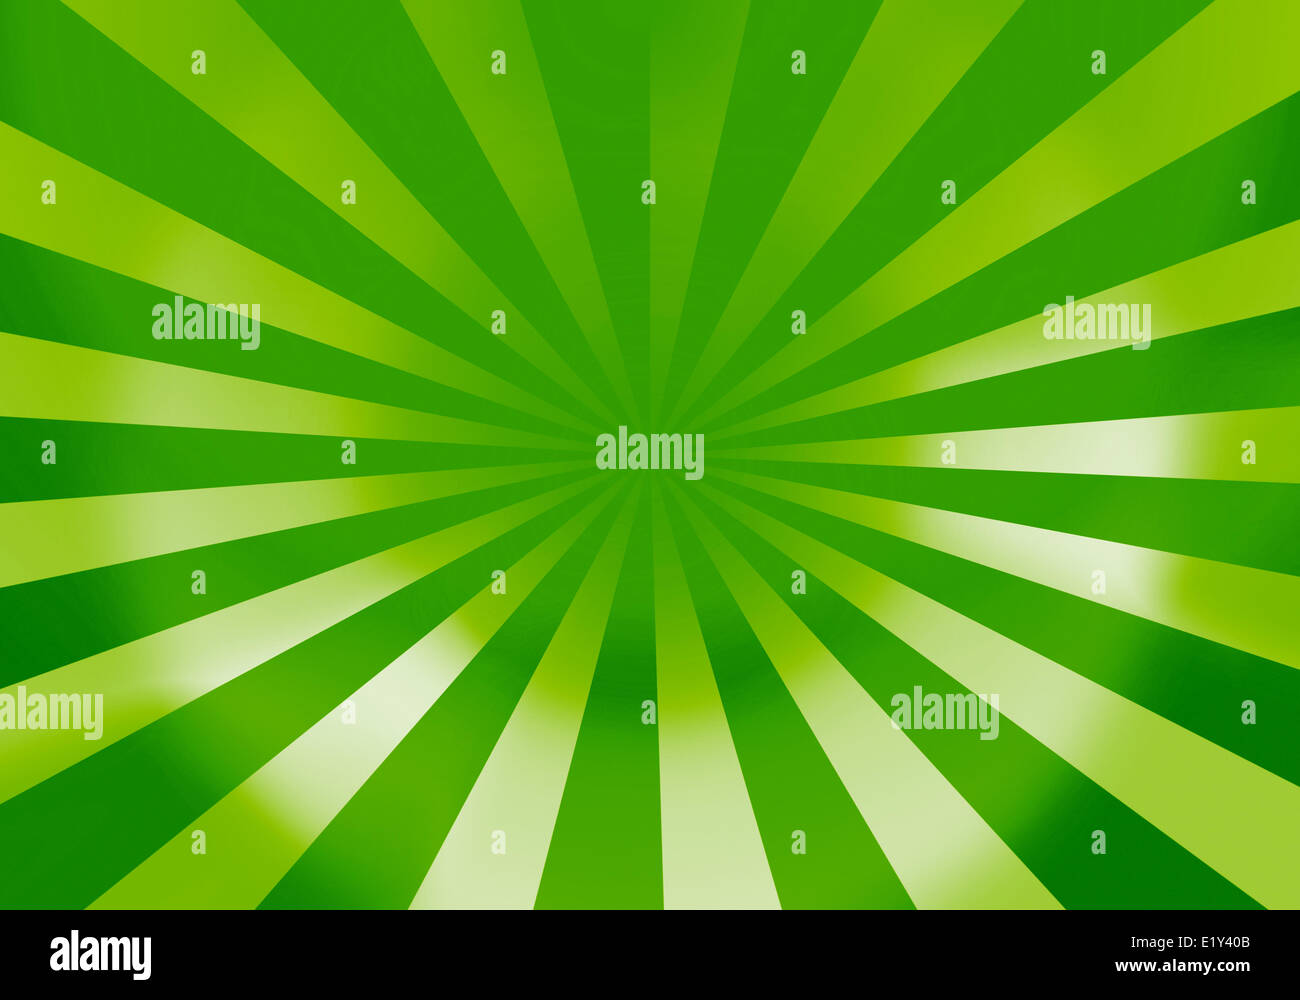 olive digital background Stock Photo - Alamy